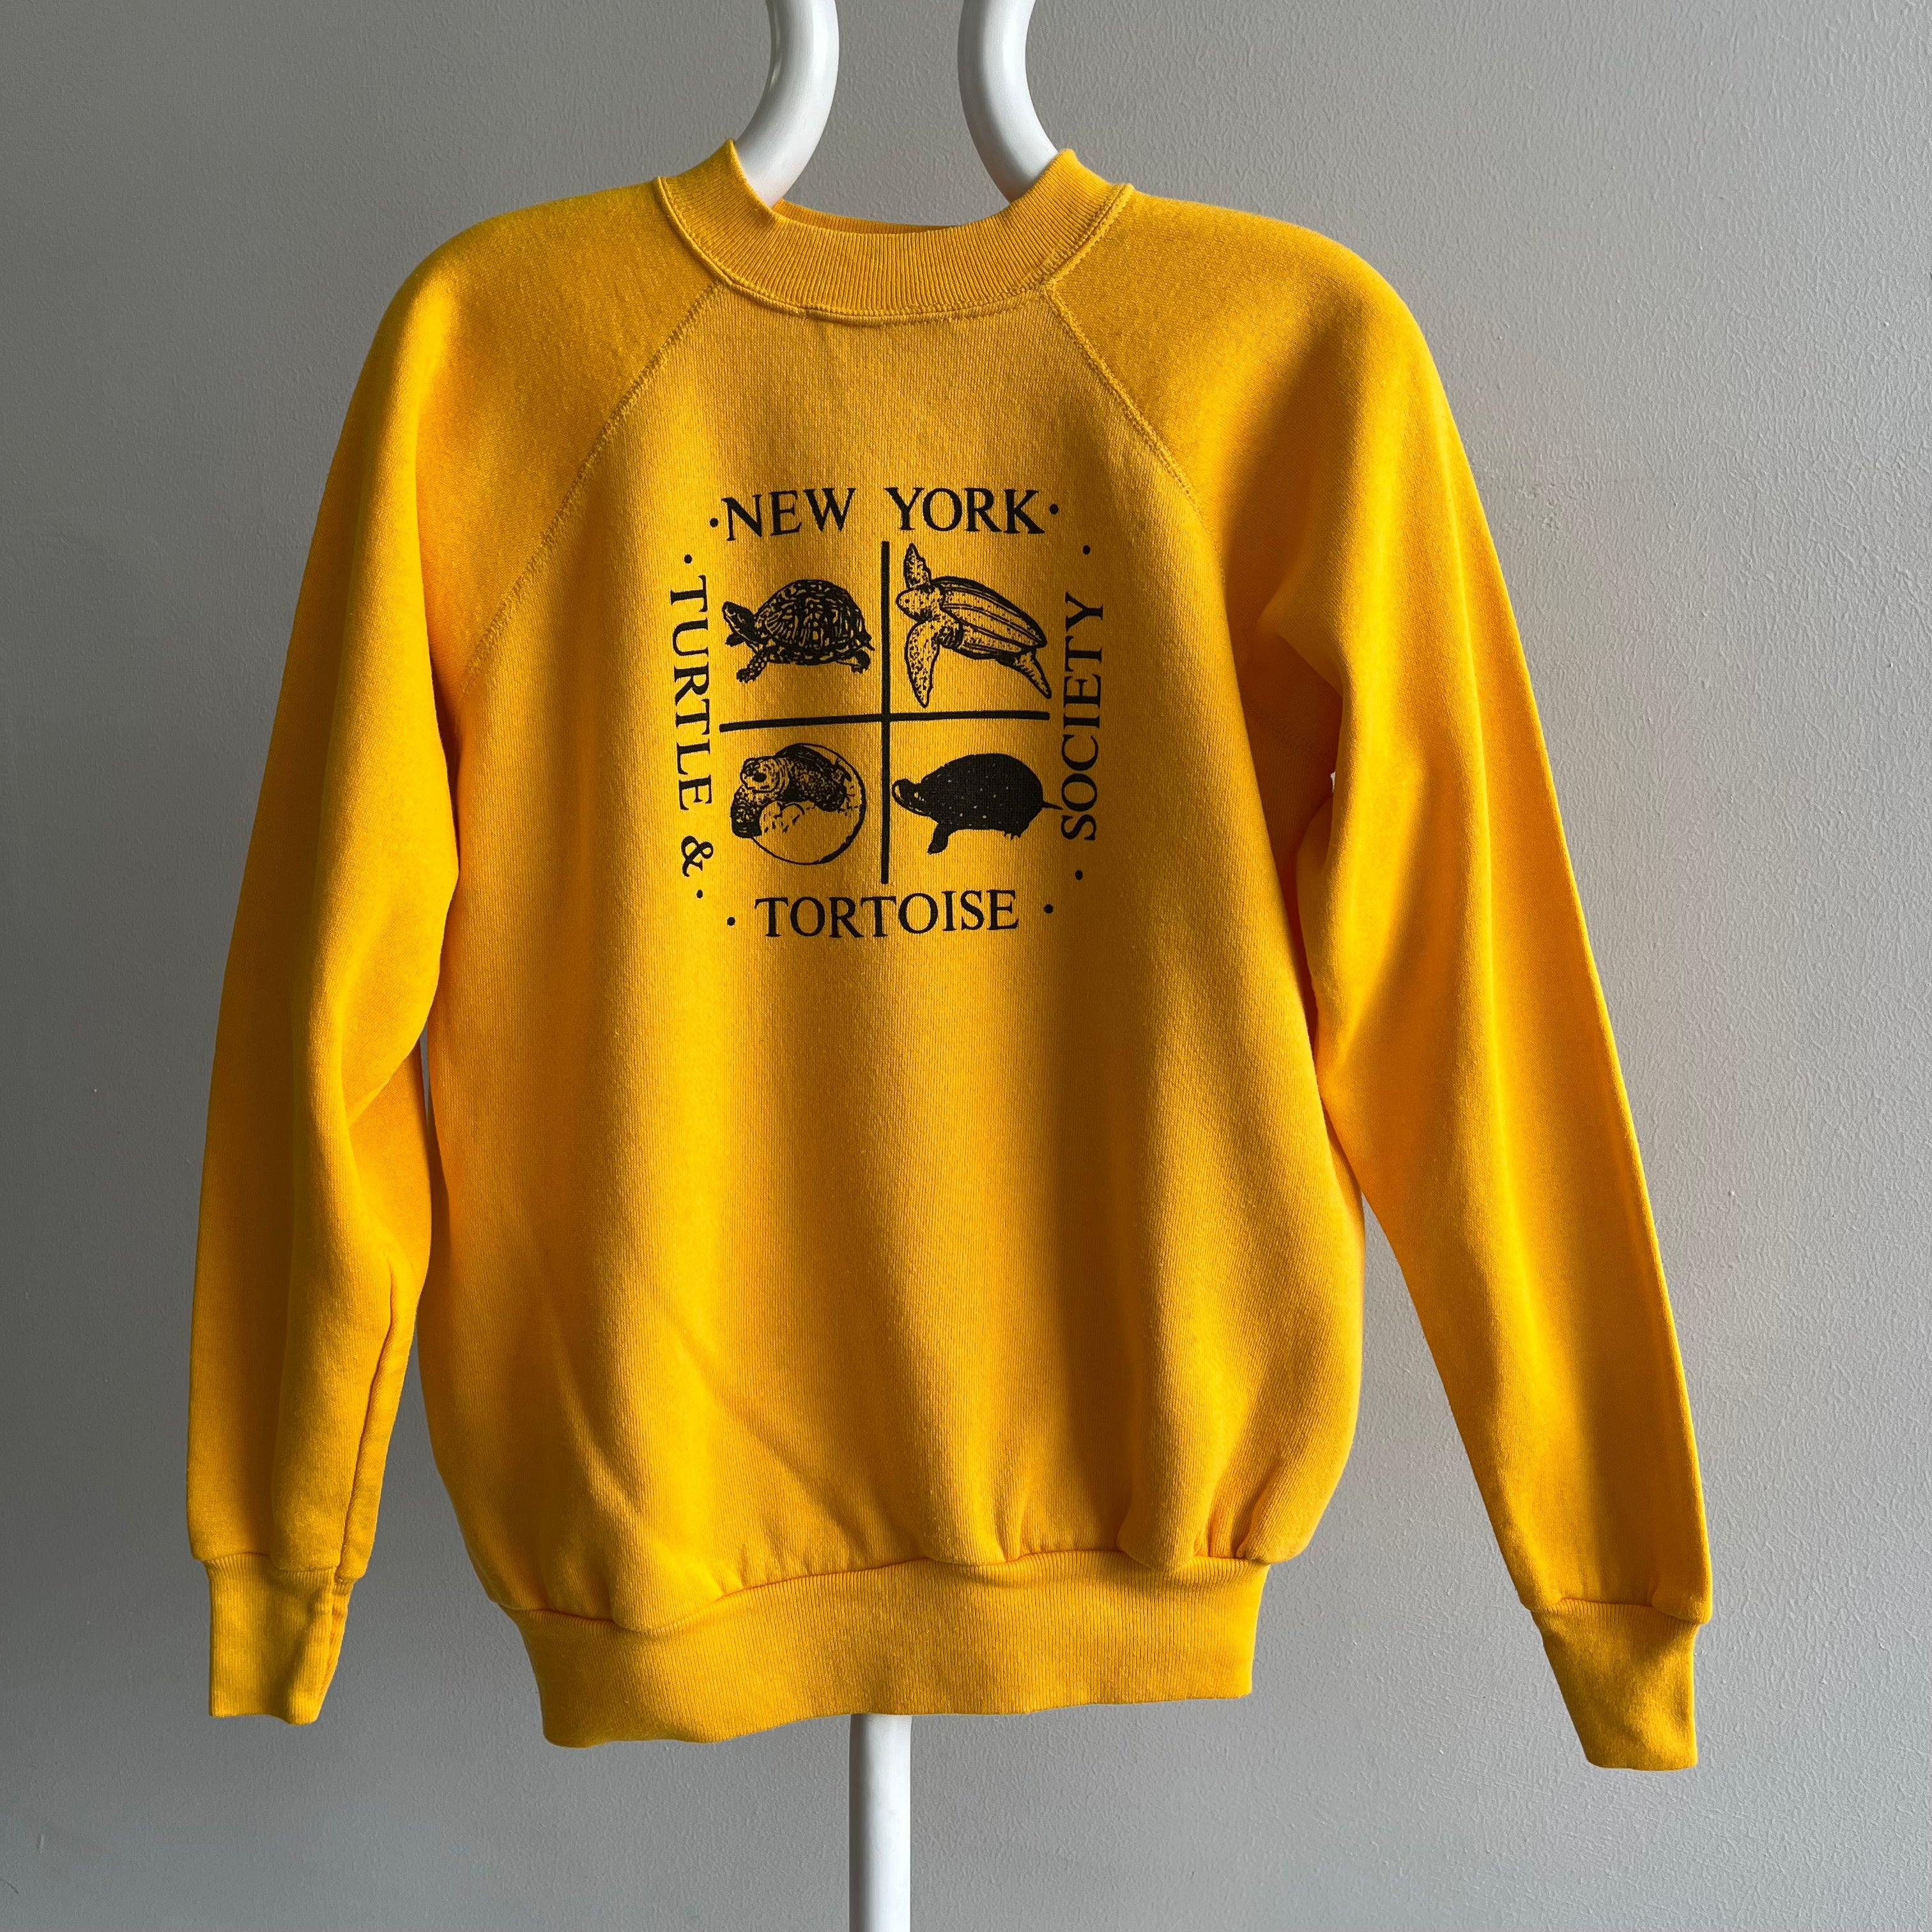 1980s New York Turtle and Tortoise Society Sweatshirt